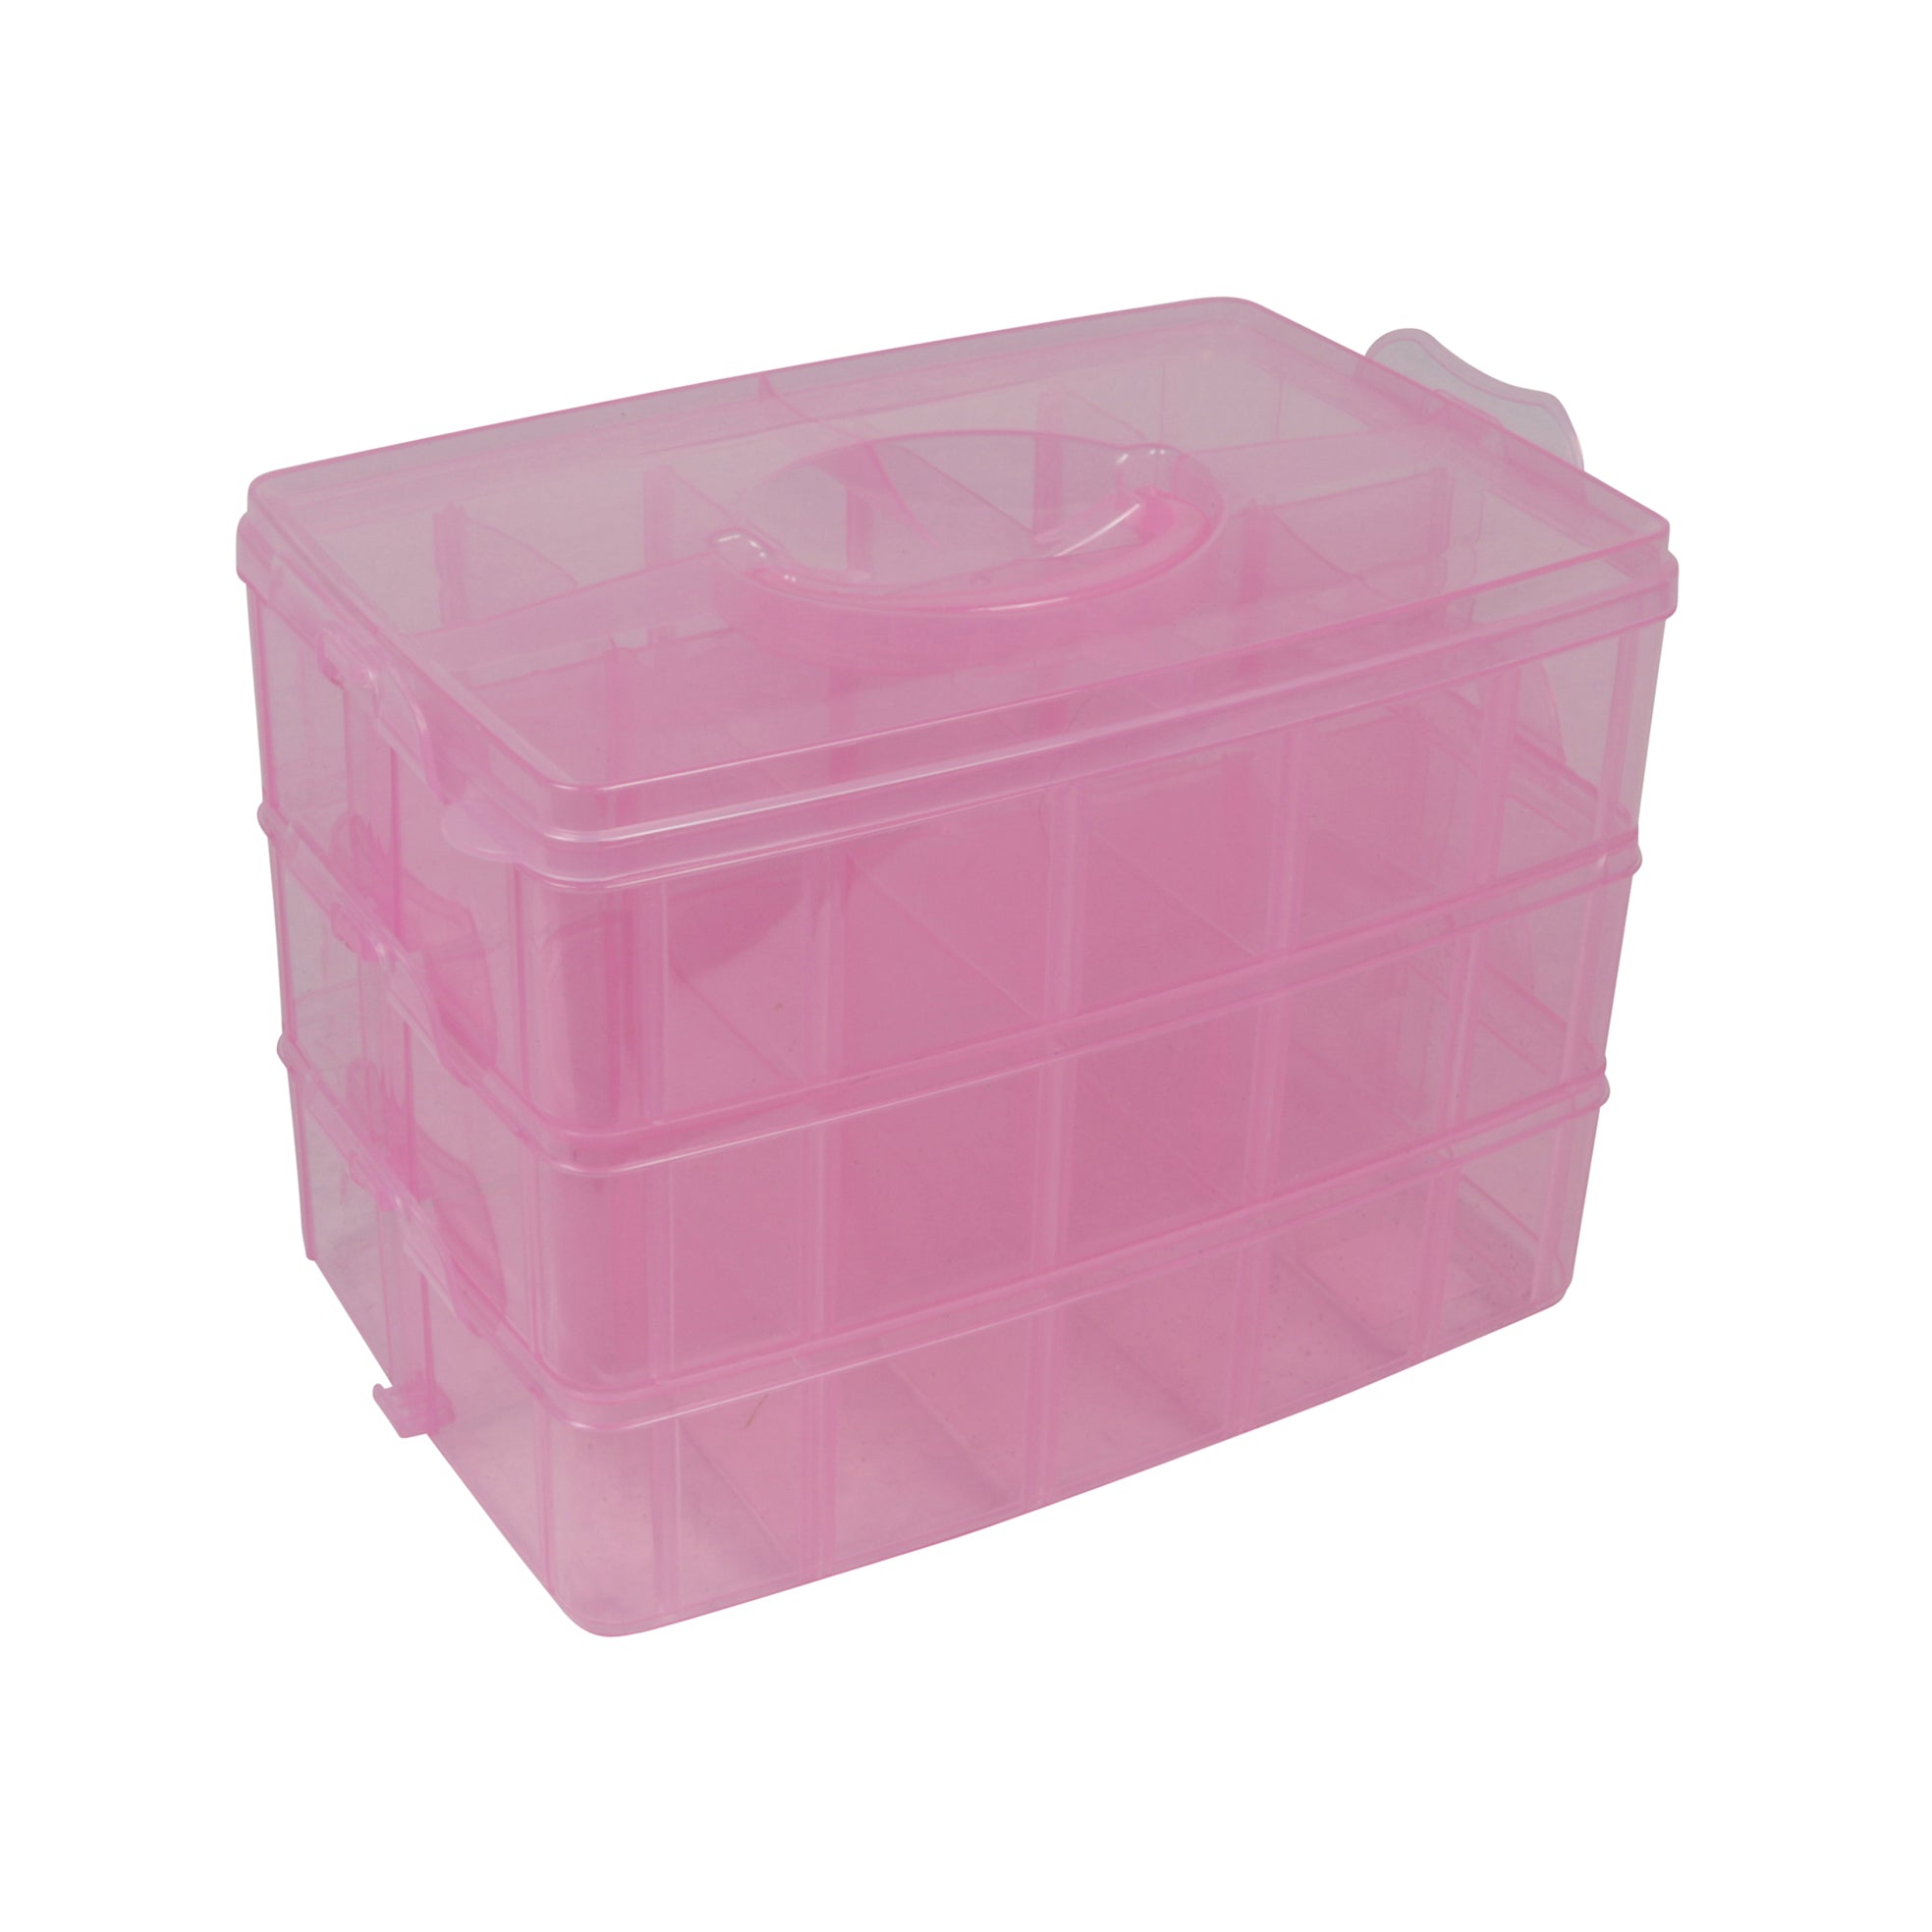 Plastic Compartment Organizer Products